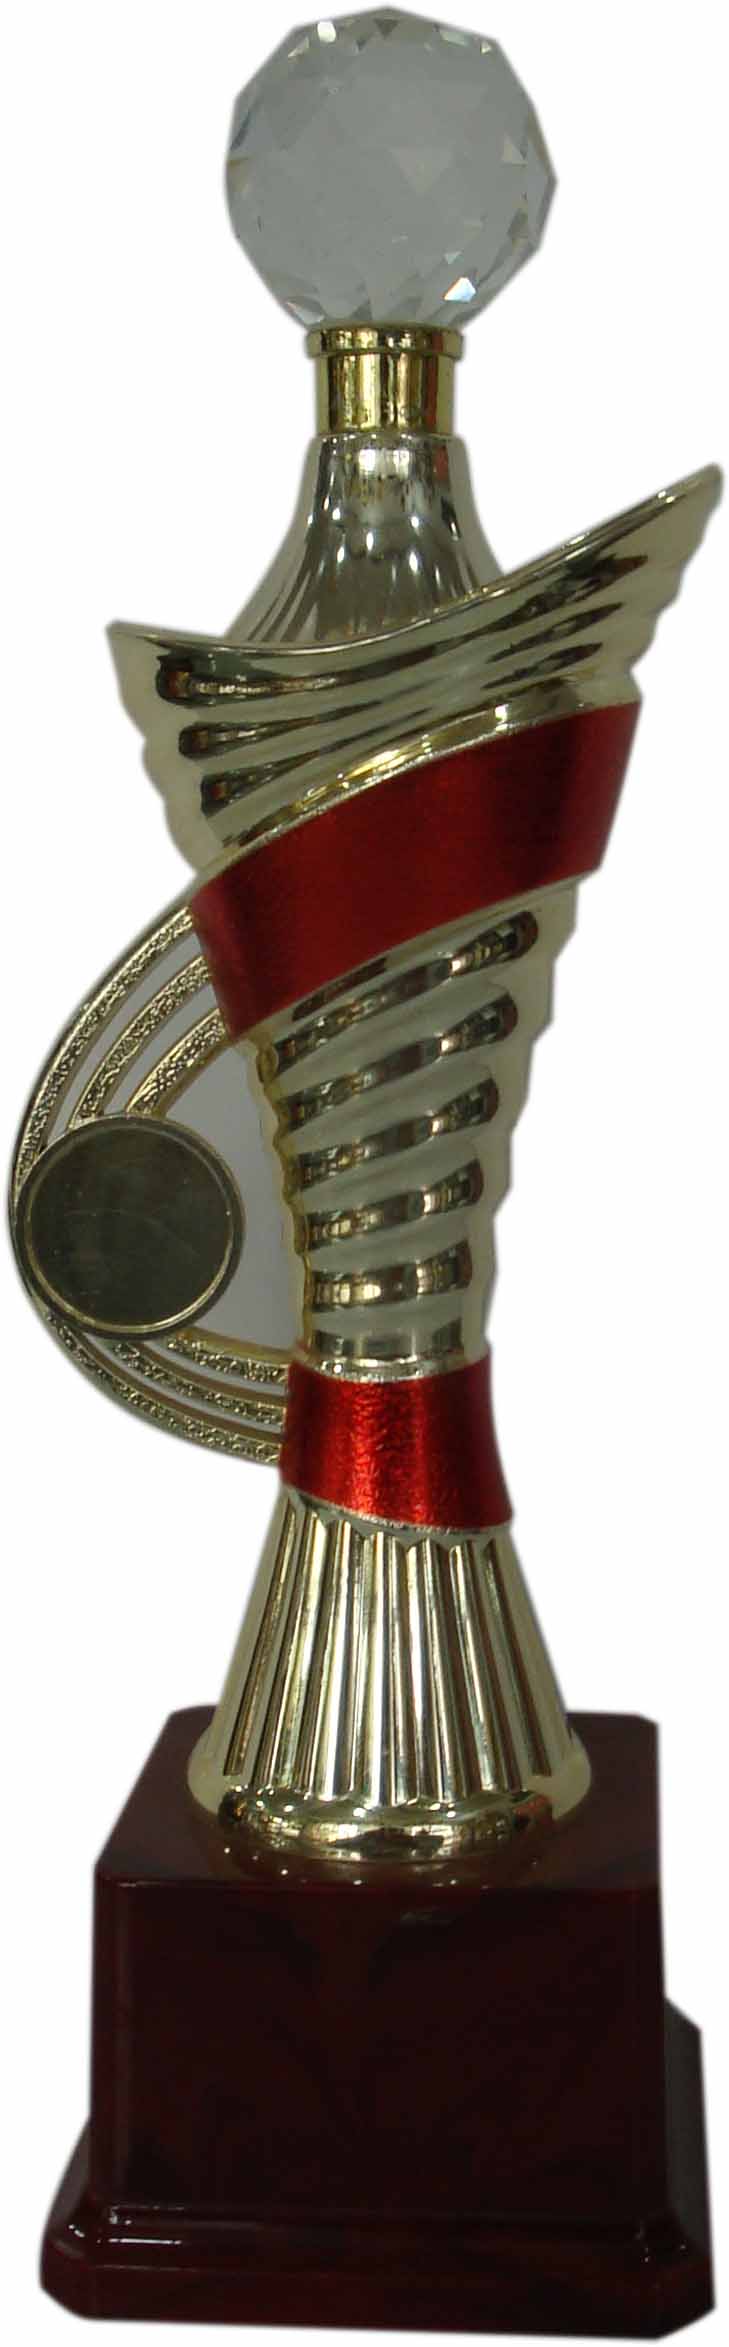 ABS 721   | Prize Land | ABS trophy manufacturer in Chandigarh - GLK2363